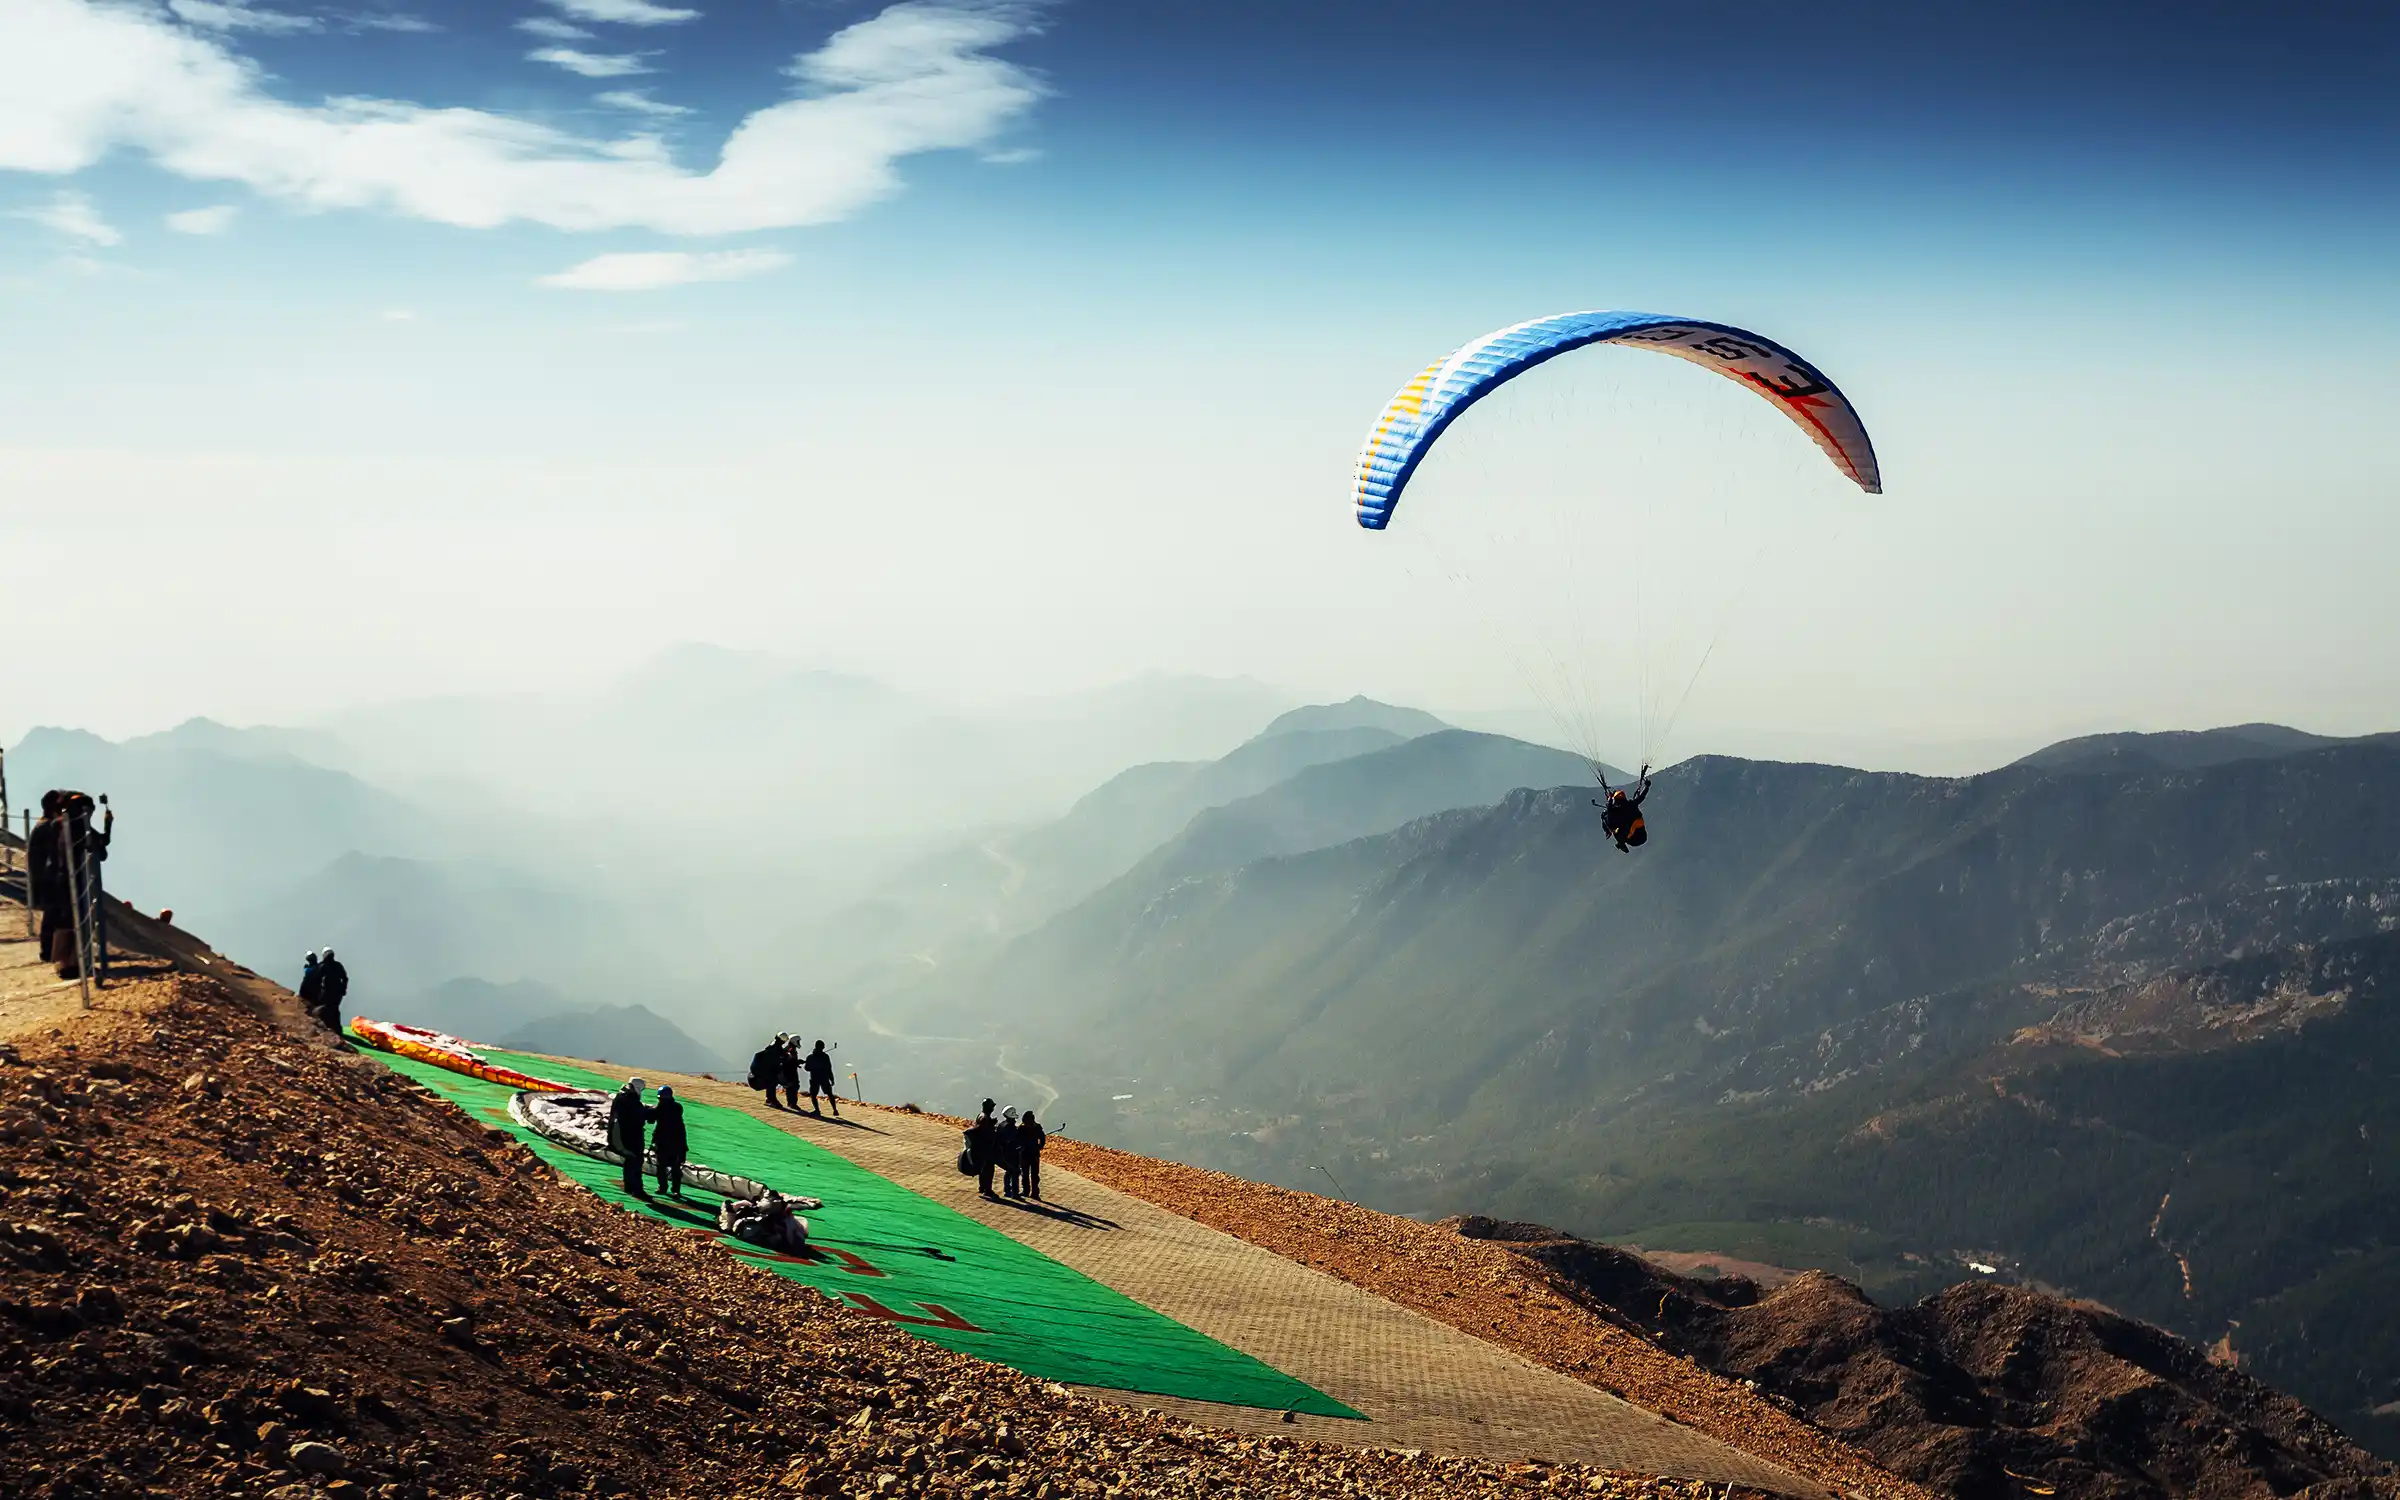 Paragliding In Shimla